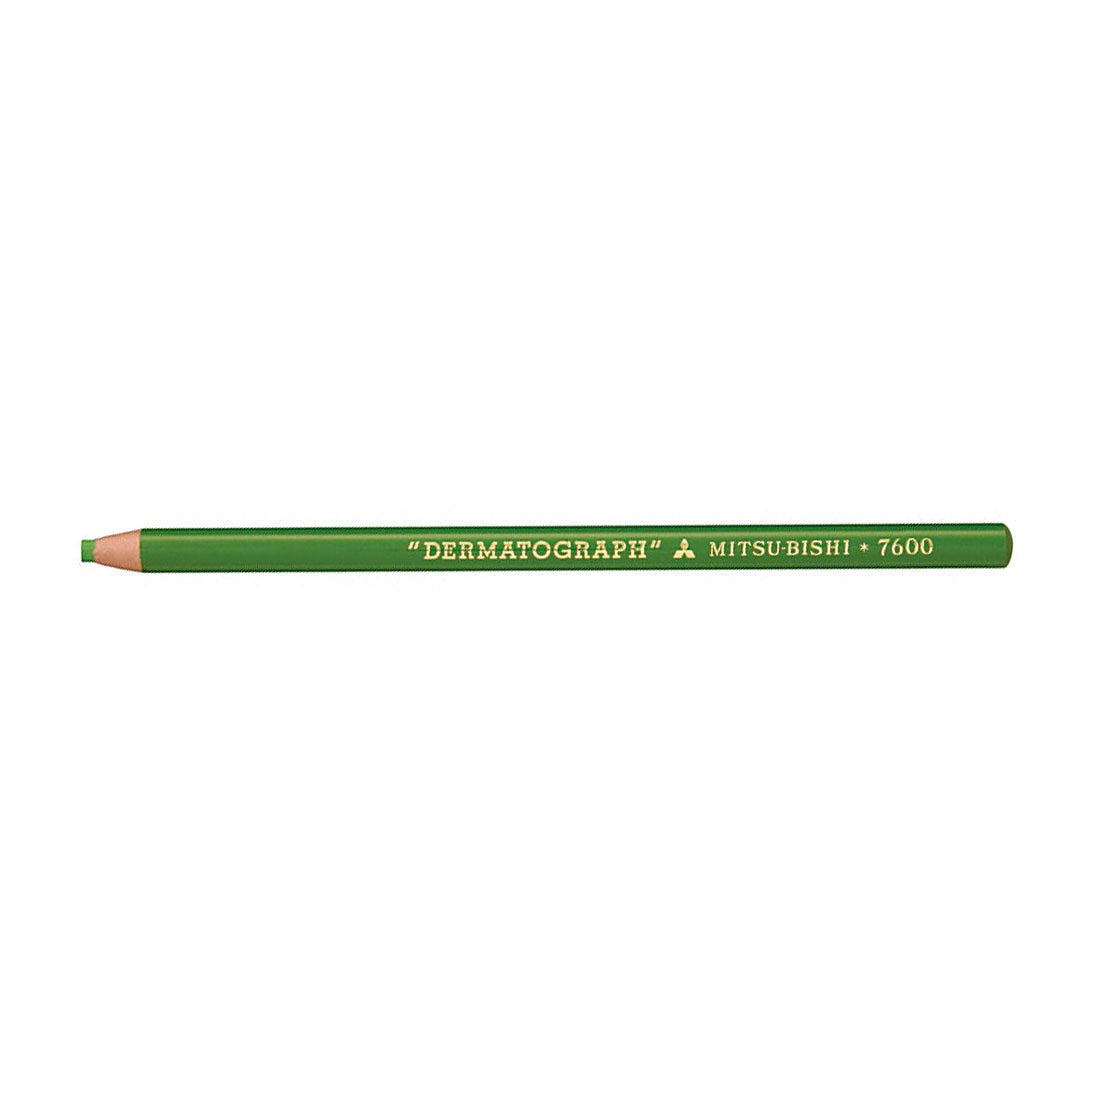 Kimberly Graphite Pencil 9XXB